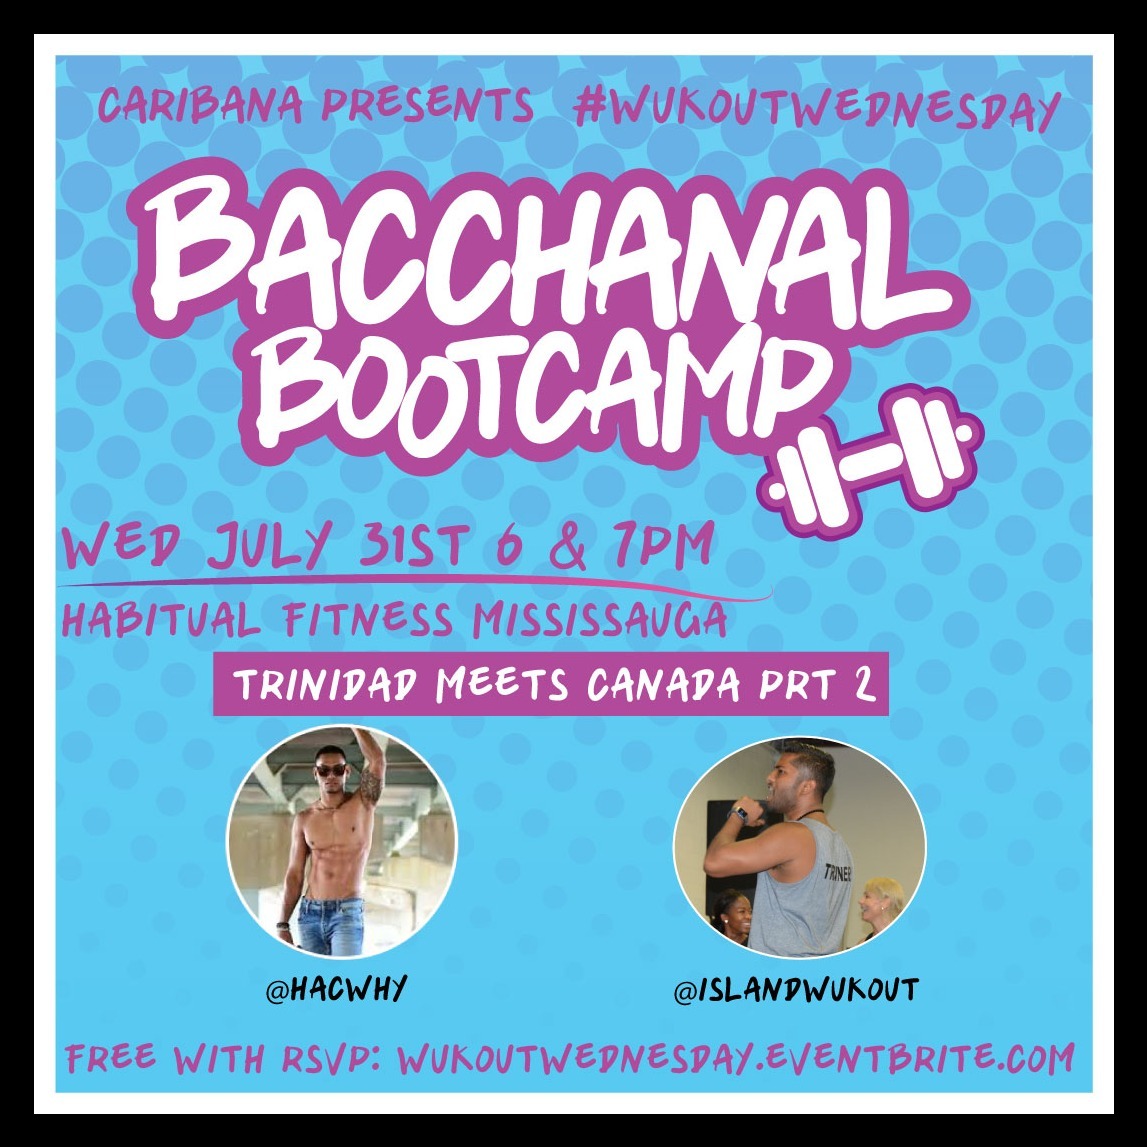 Bacchanal Bootcamp 7pm